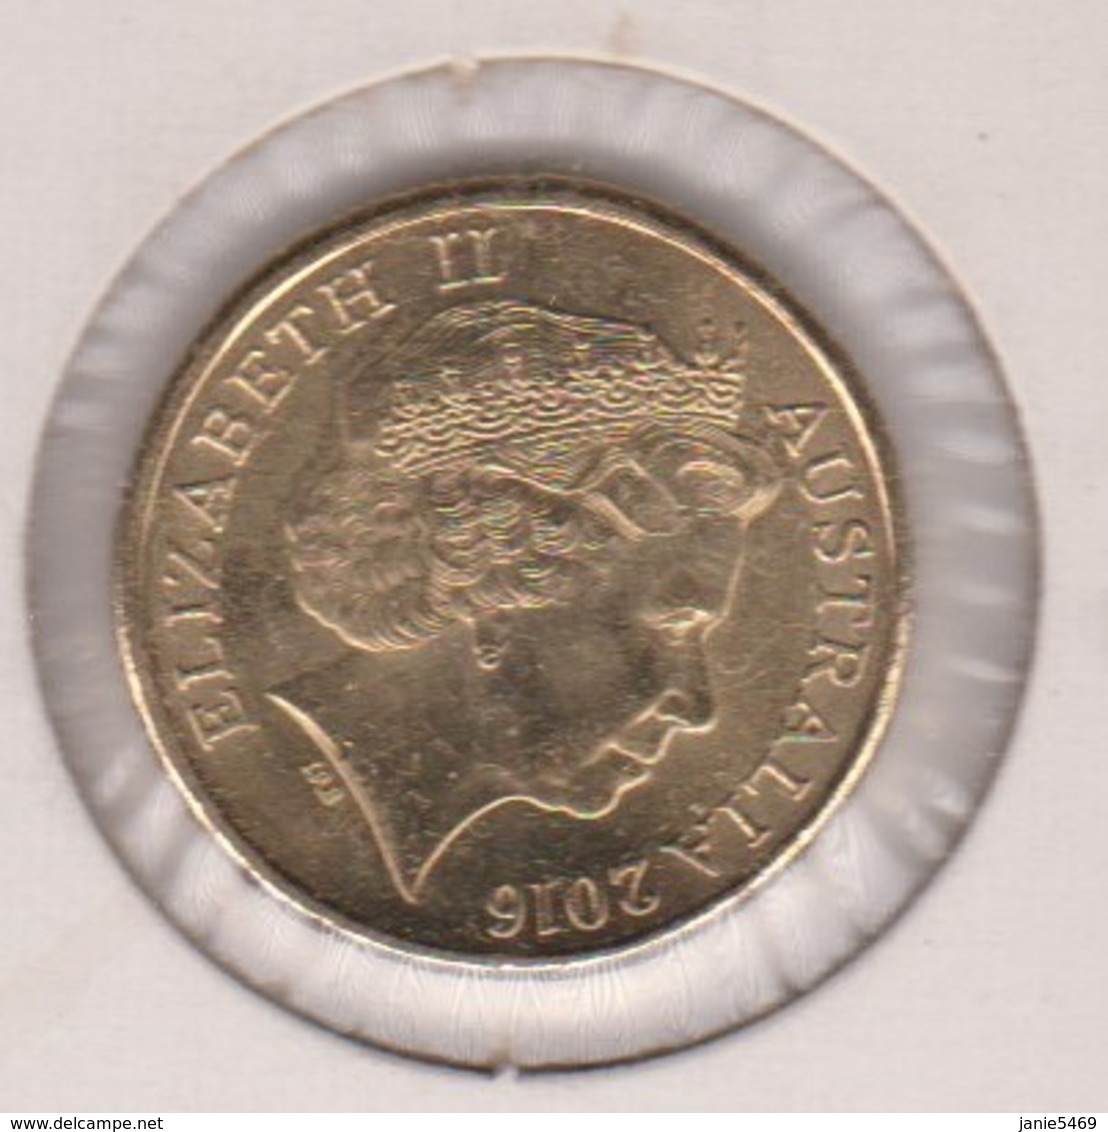 Australia 2016 Queen Elizabeth II $ 1.00 Coin - Dollar